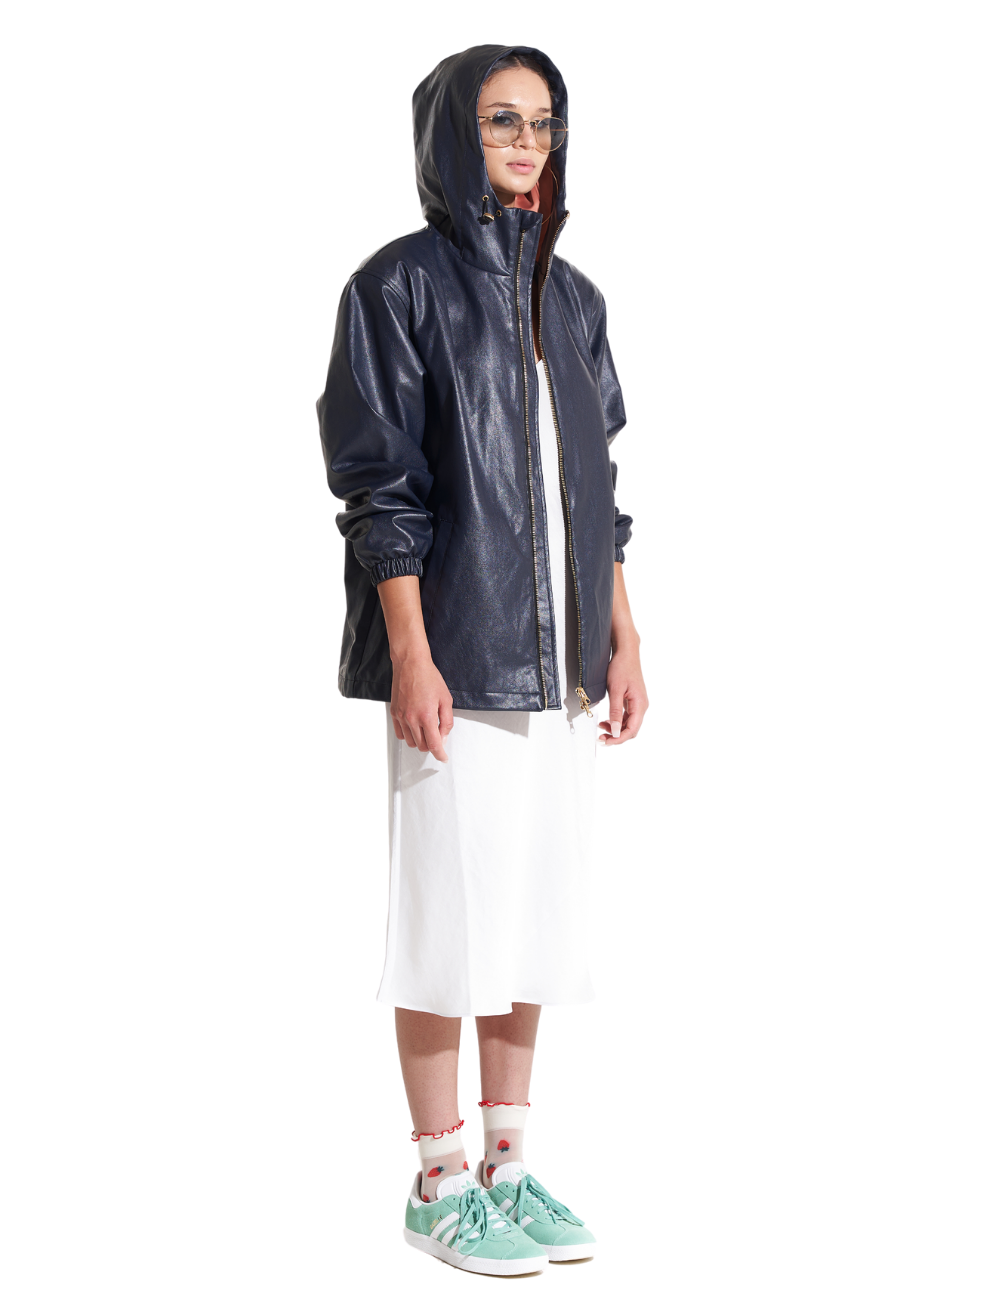 Hunter Raincoat Indigo Navy FREED Luxury Outerwear Spring Waterproof Fashion